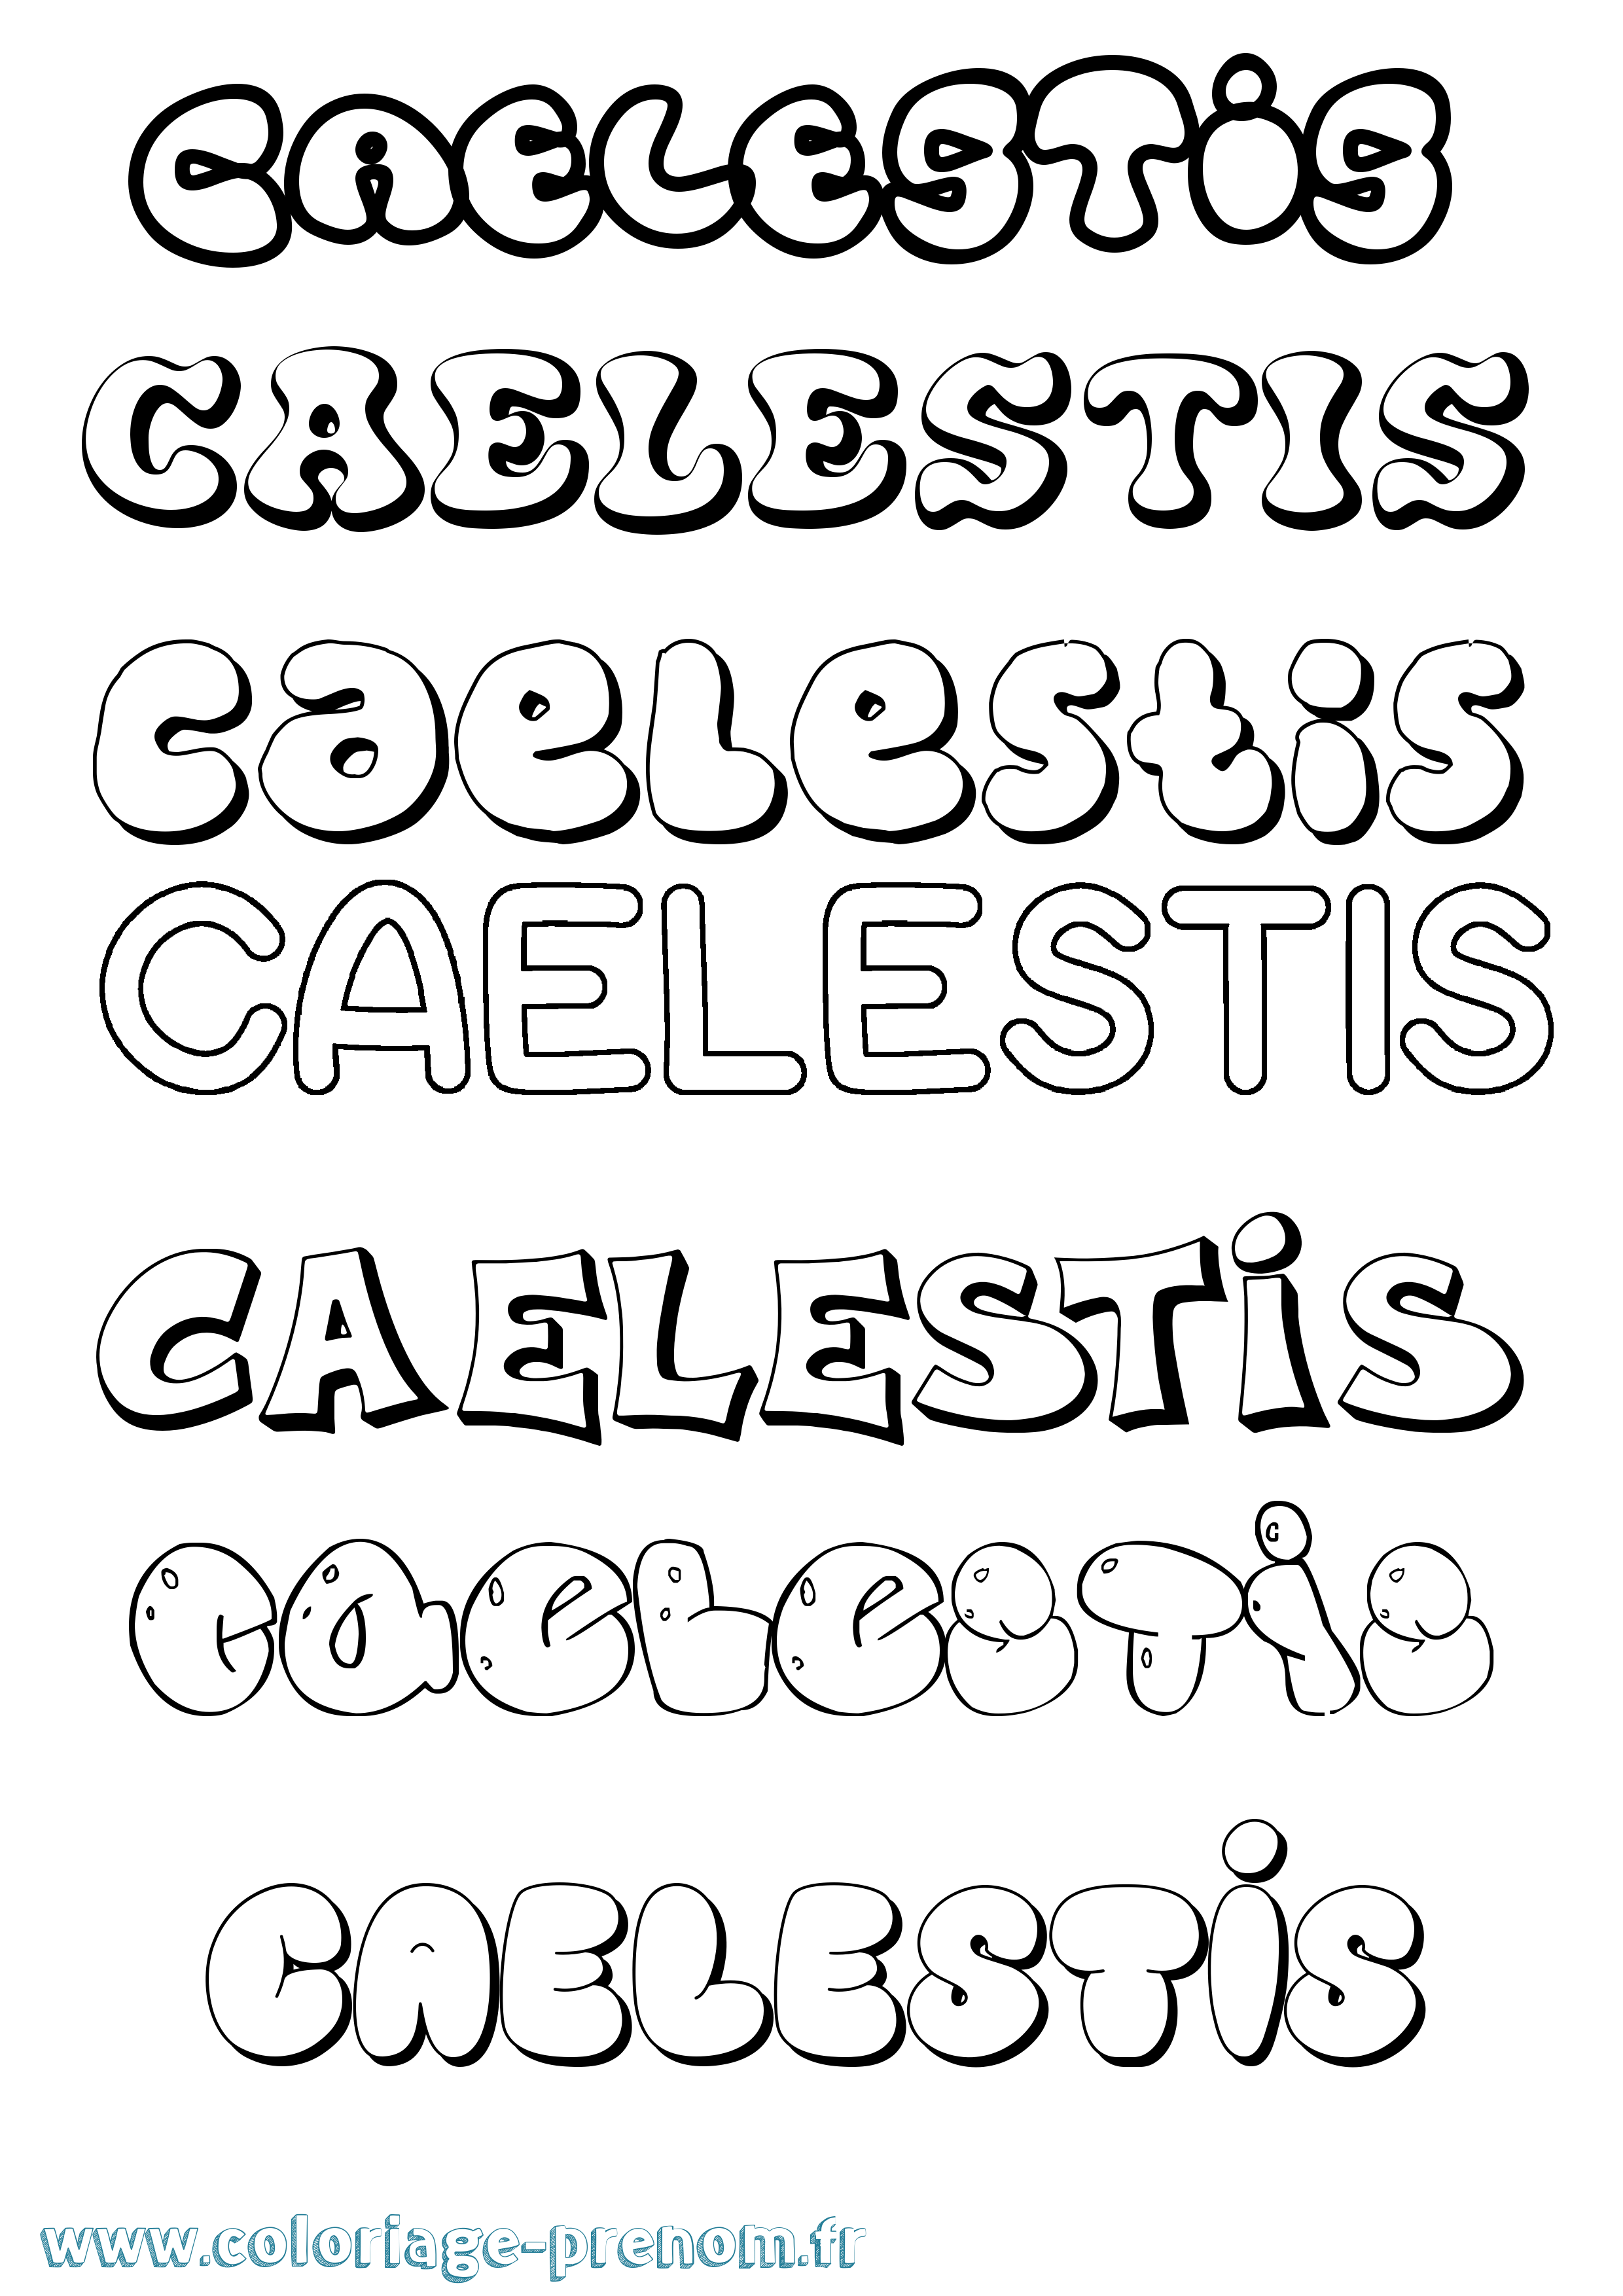 Coloriage prénom Caelestis Bubble